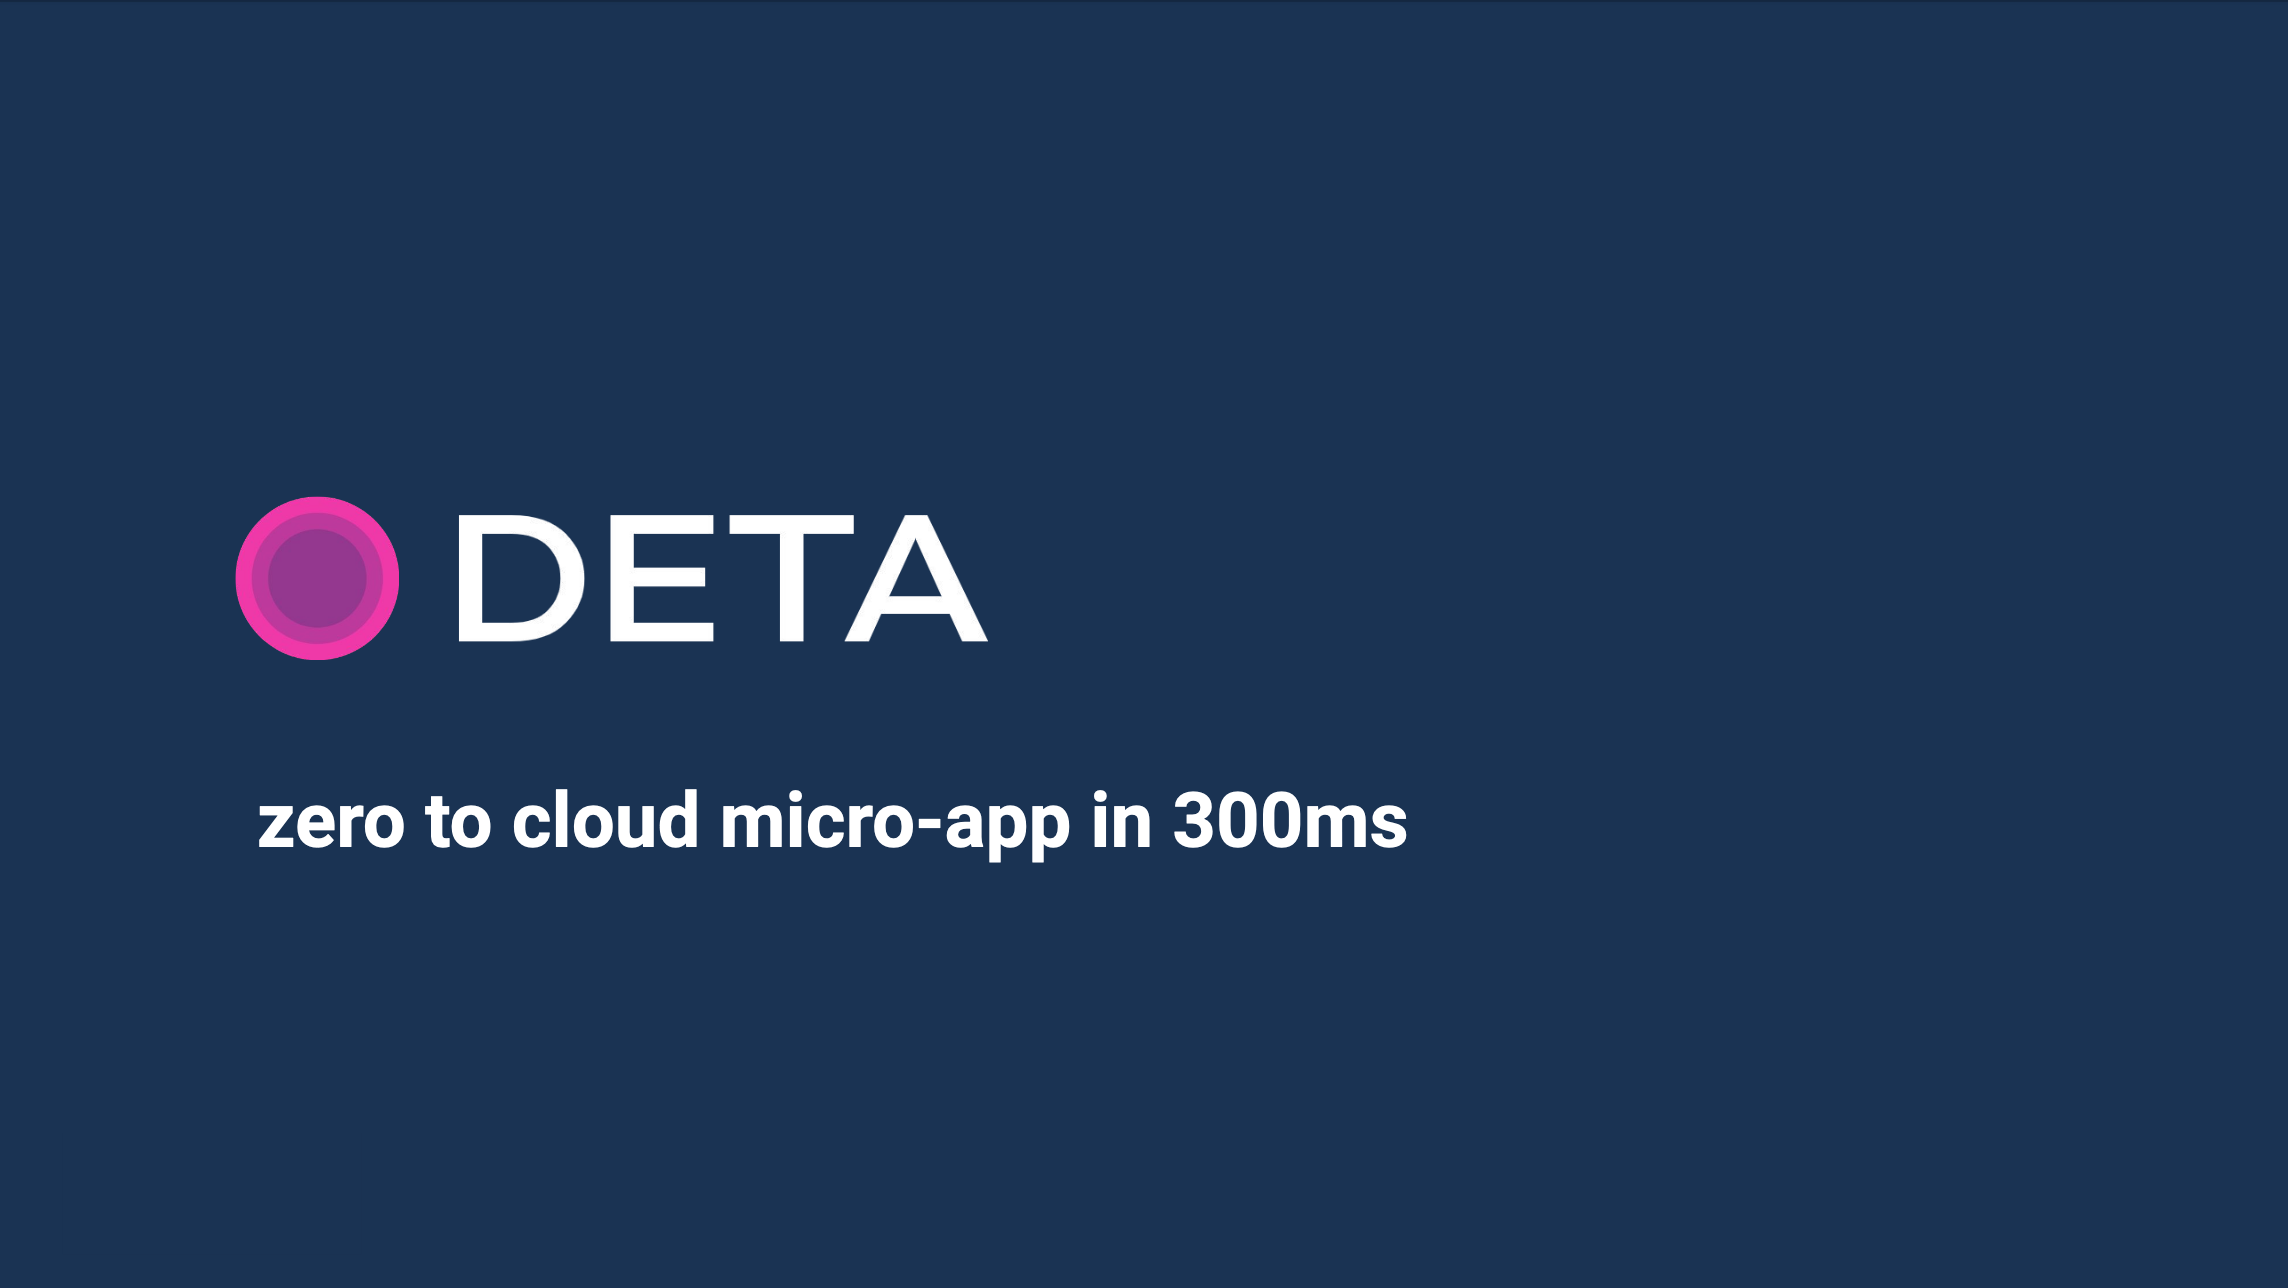 «Deta – zero to cloud micro-app in 300ms» by Max Eusterbrock